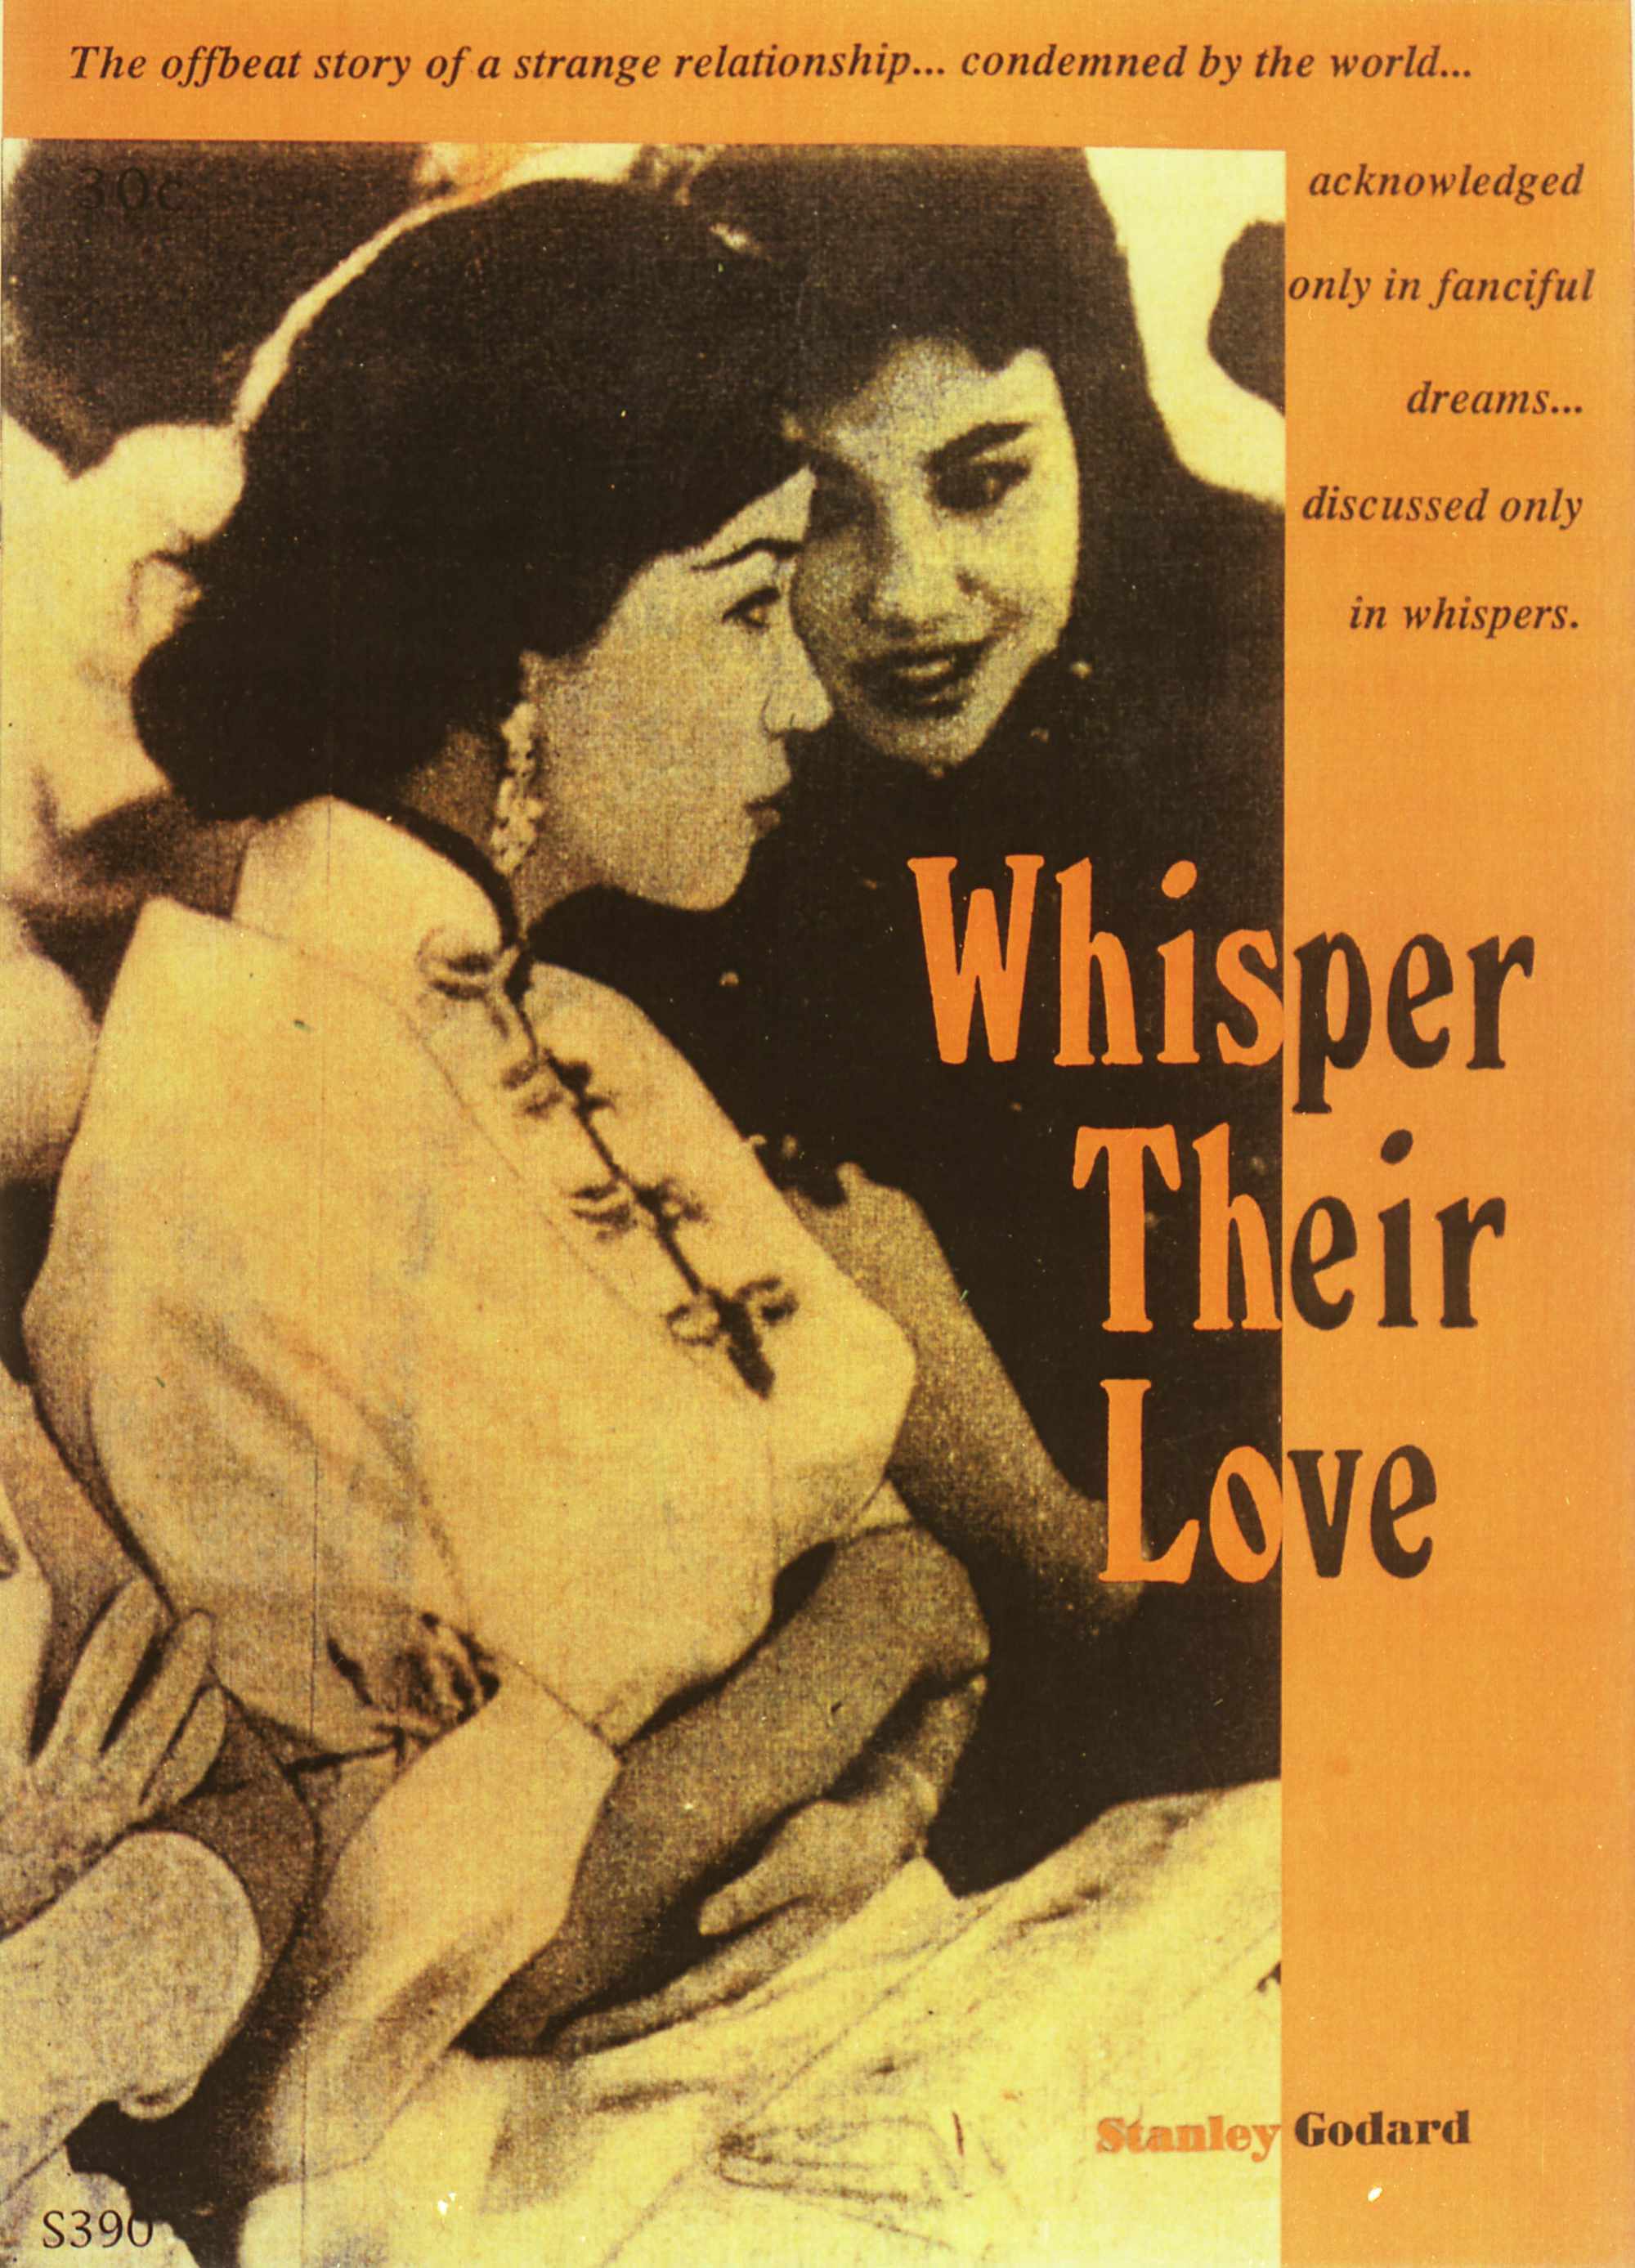 Whisper Their Love - Type C Mural Print - 1000 x 1350mm